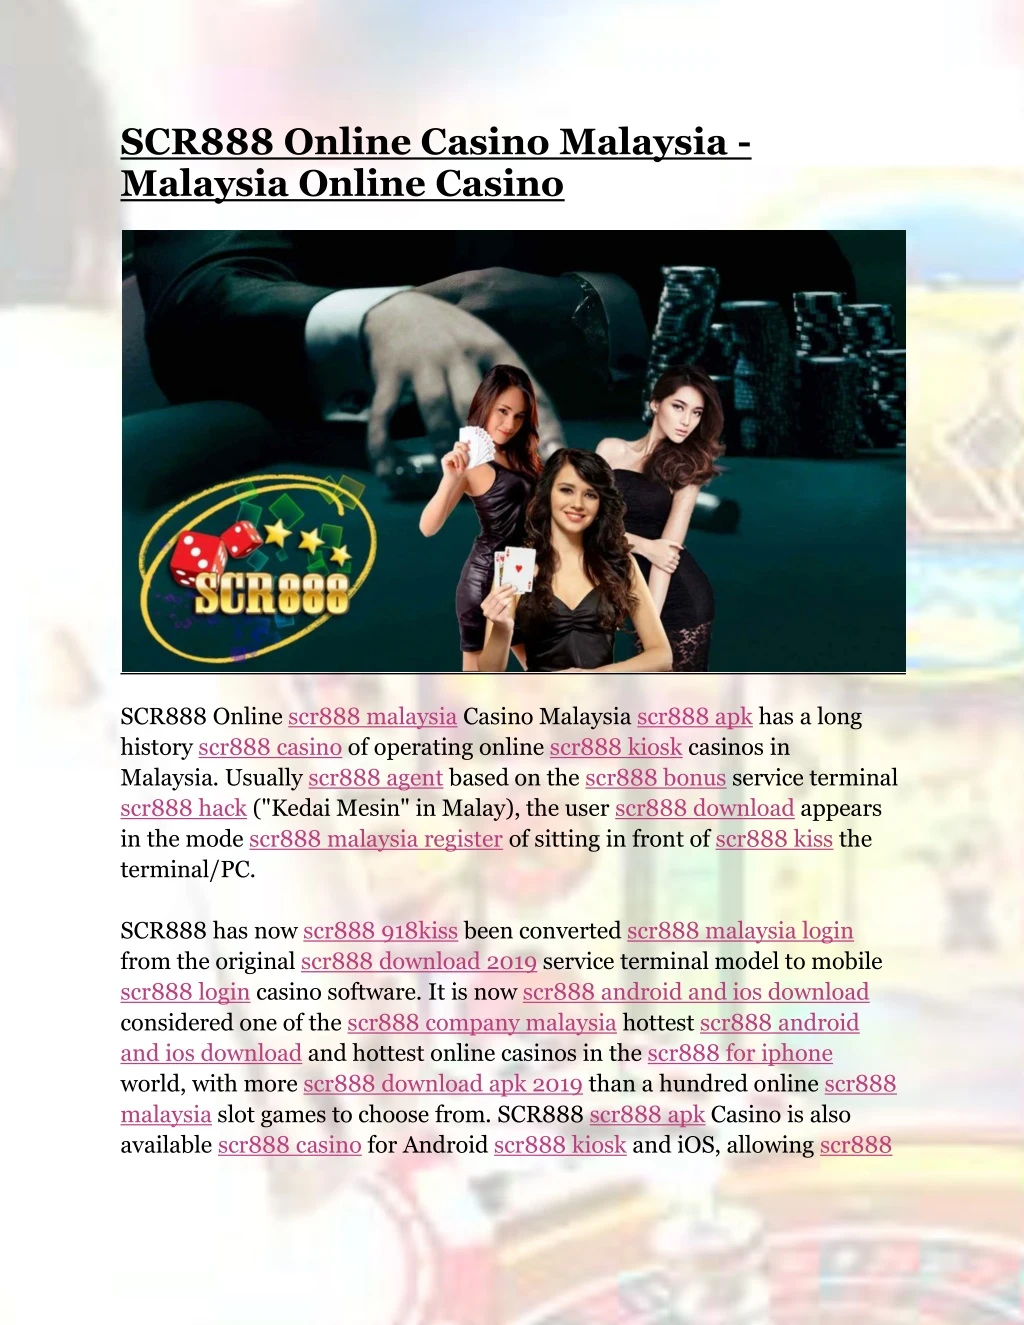 scr888 online casino malaysia malaysia online